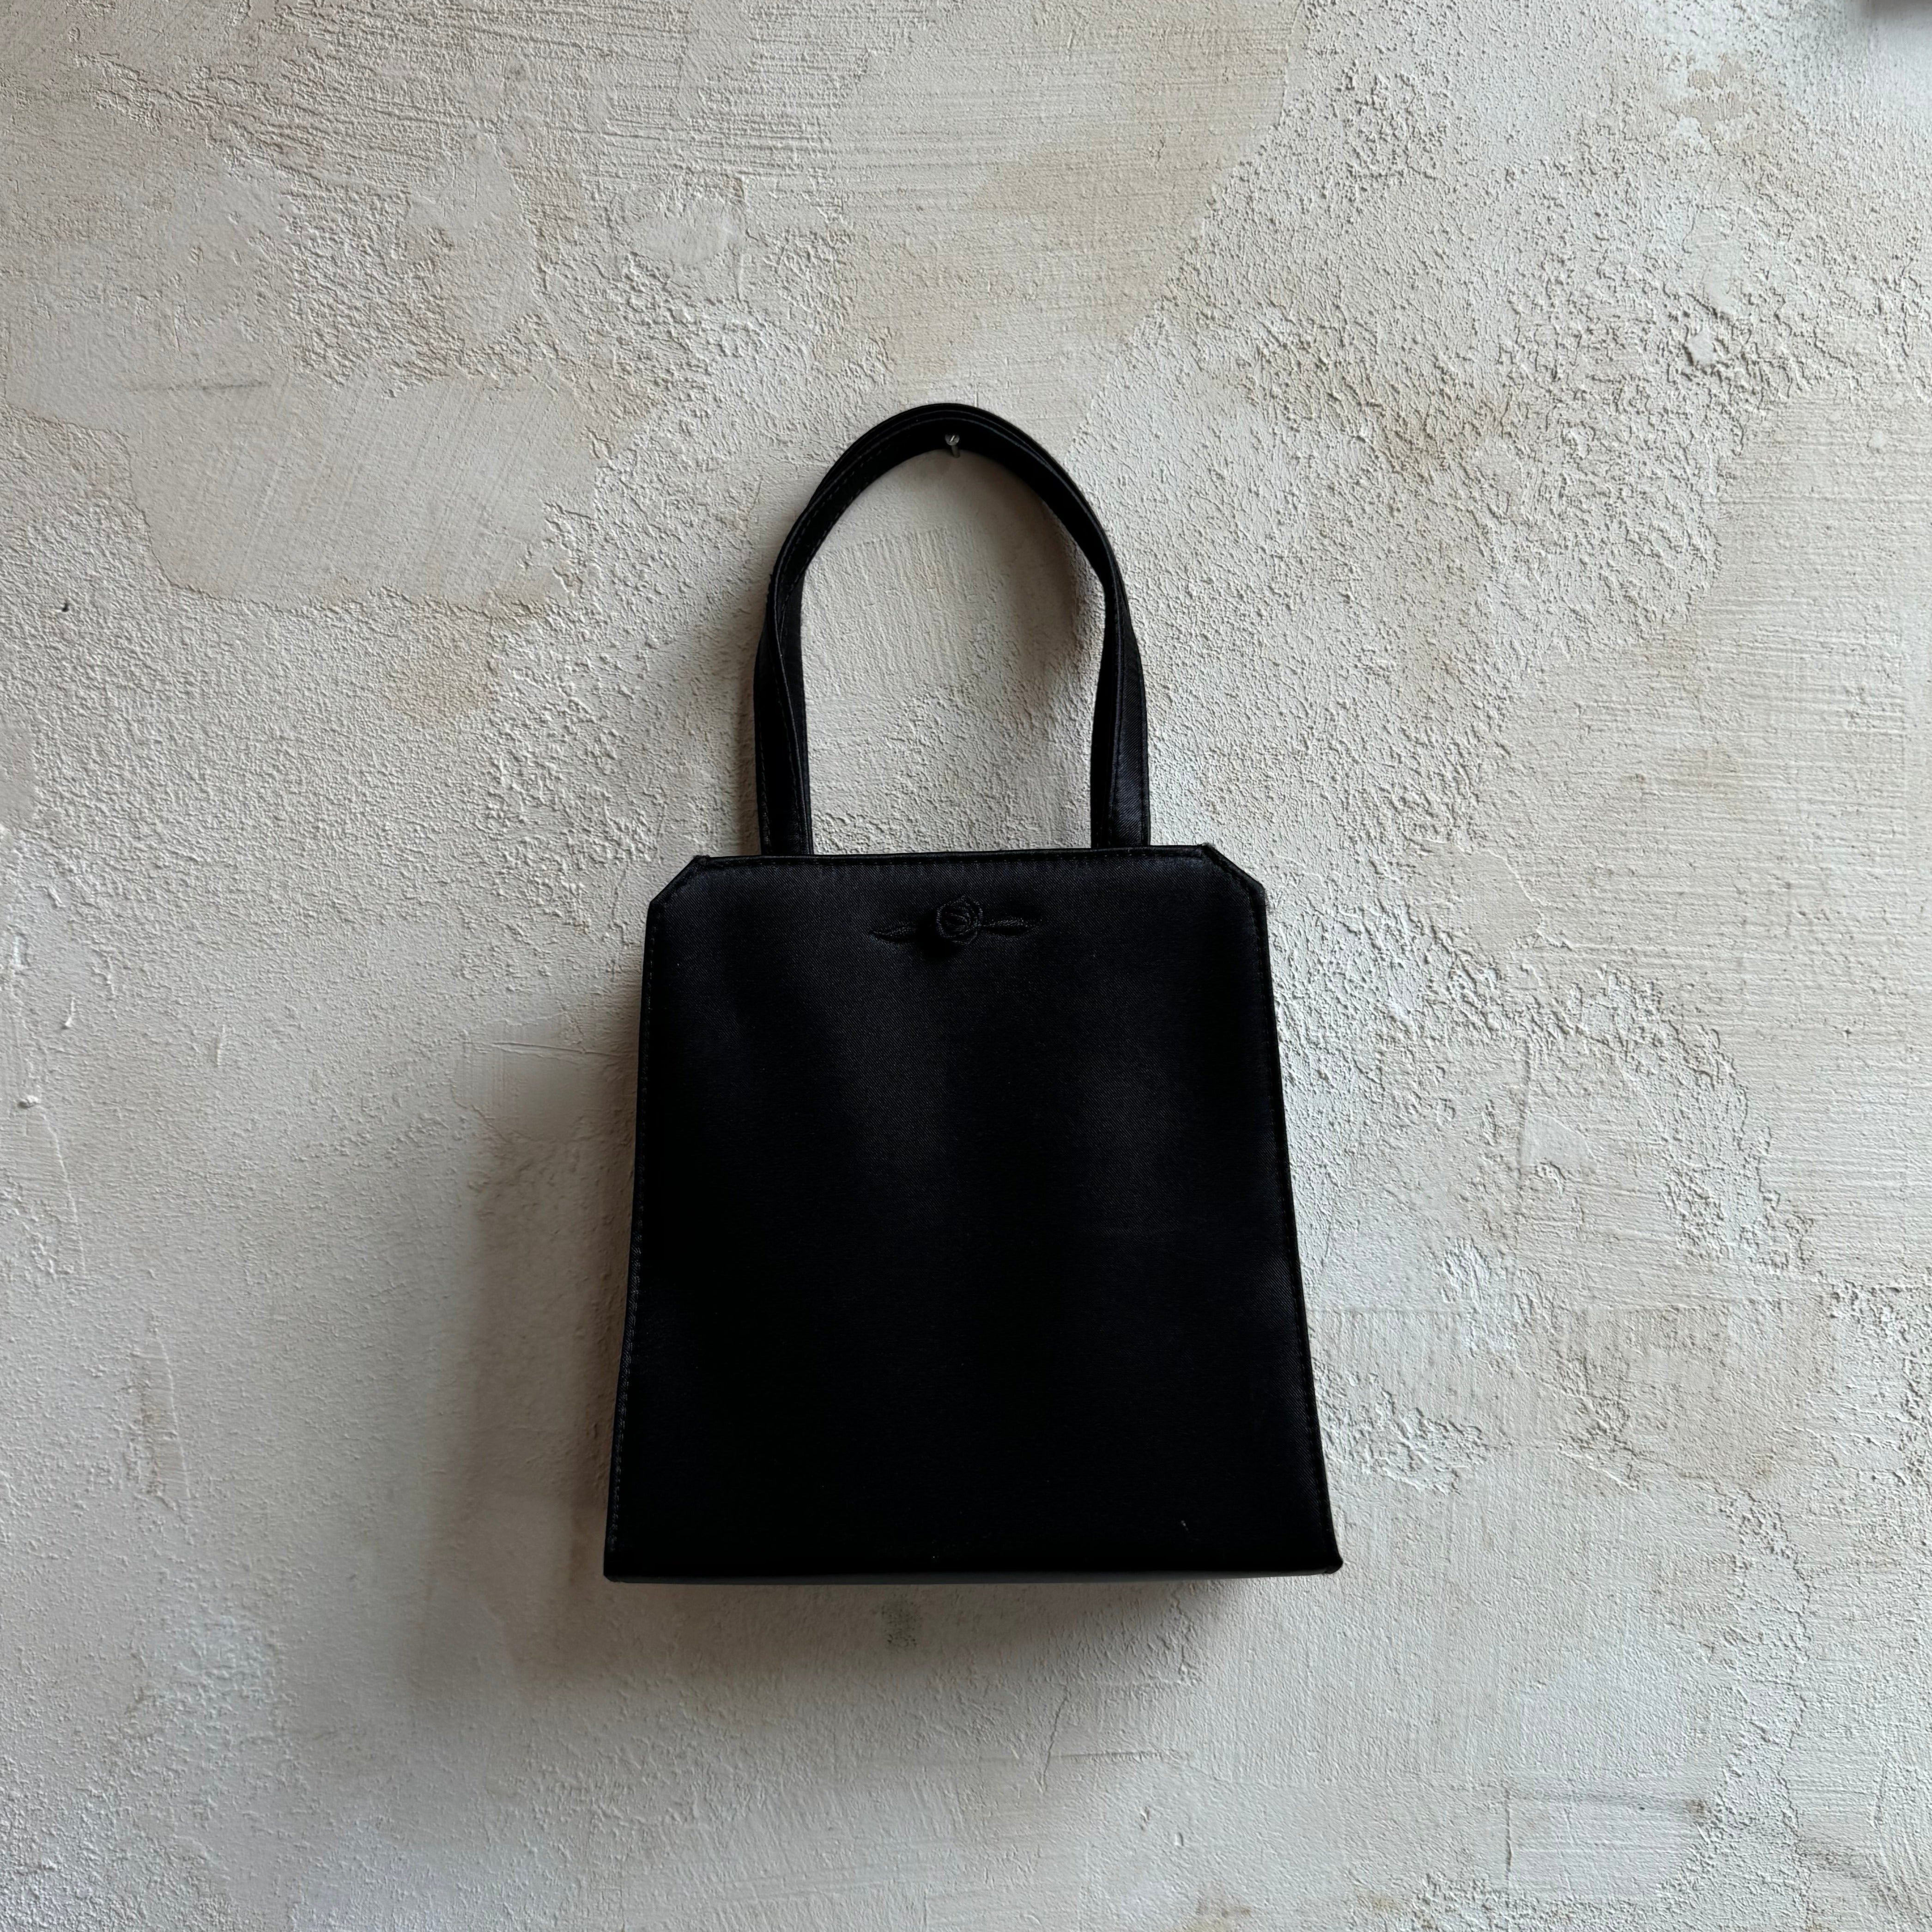 Satin Black Bag With Rosette